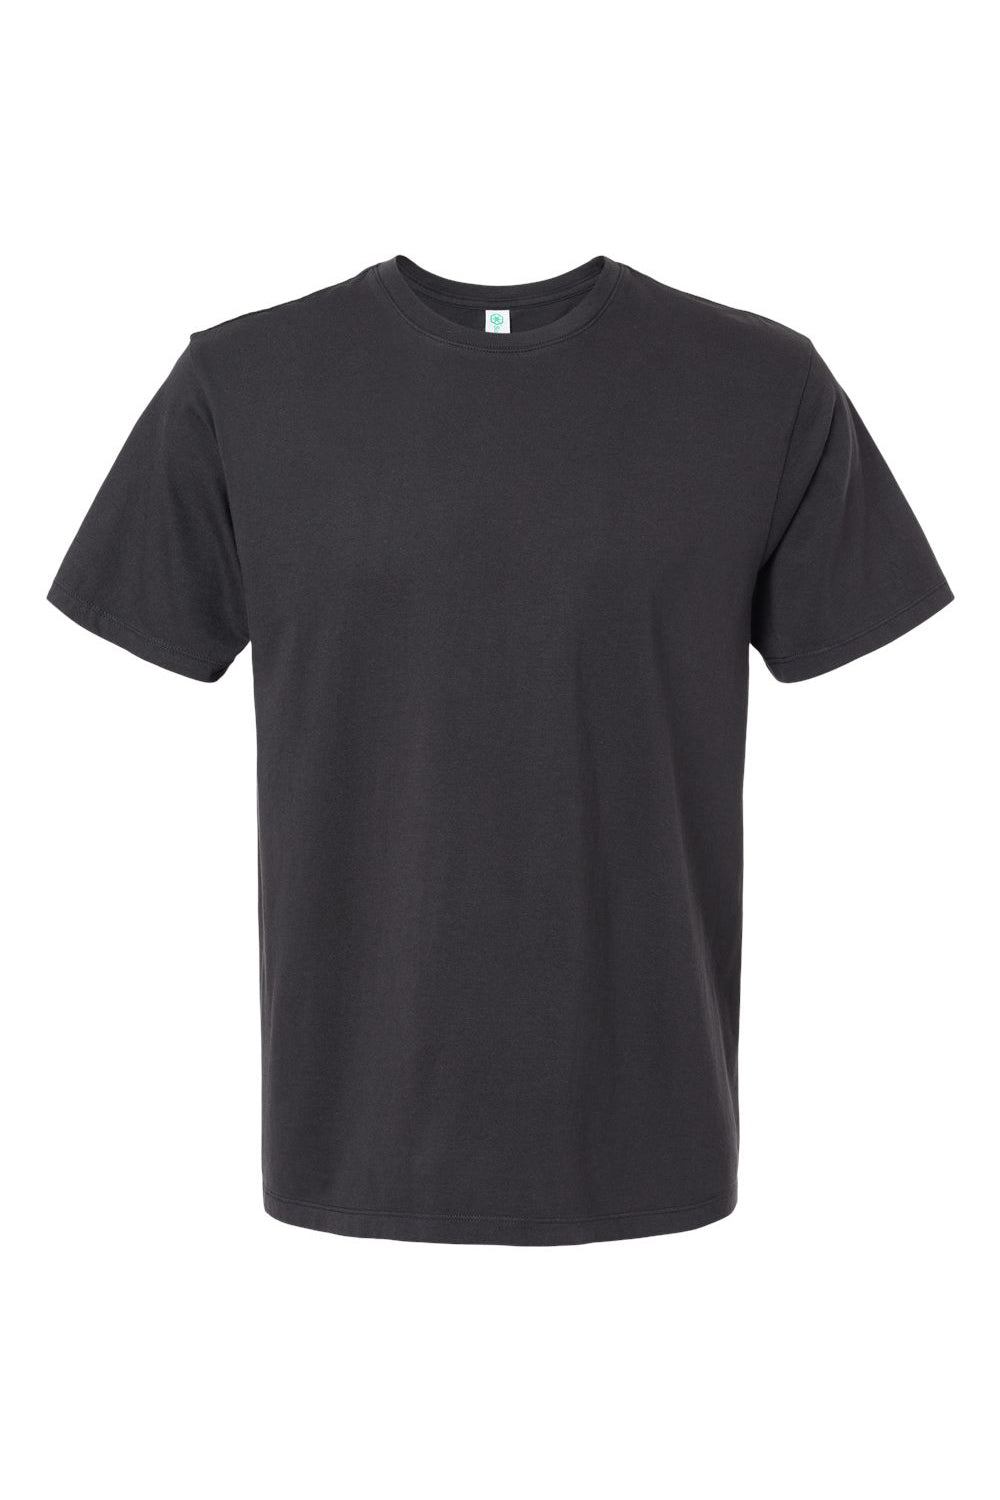 SoftShirts 400 Mens Organic Short Sleeve Crewneck T-Shirt Black Flat Front